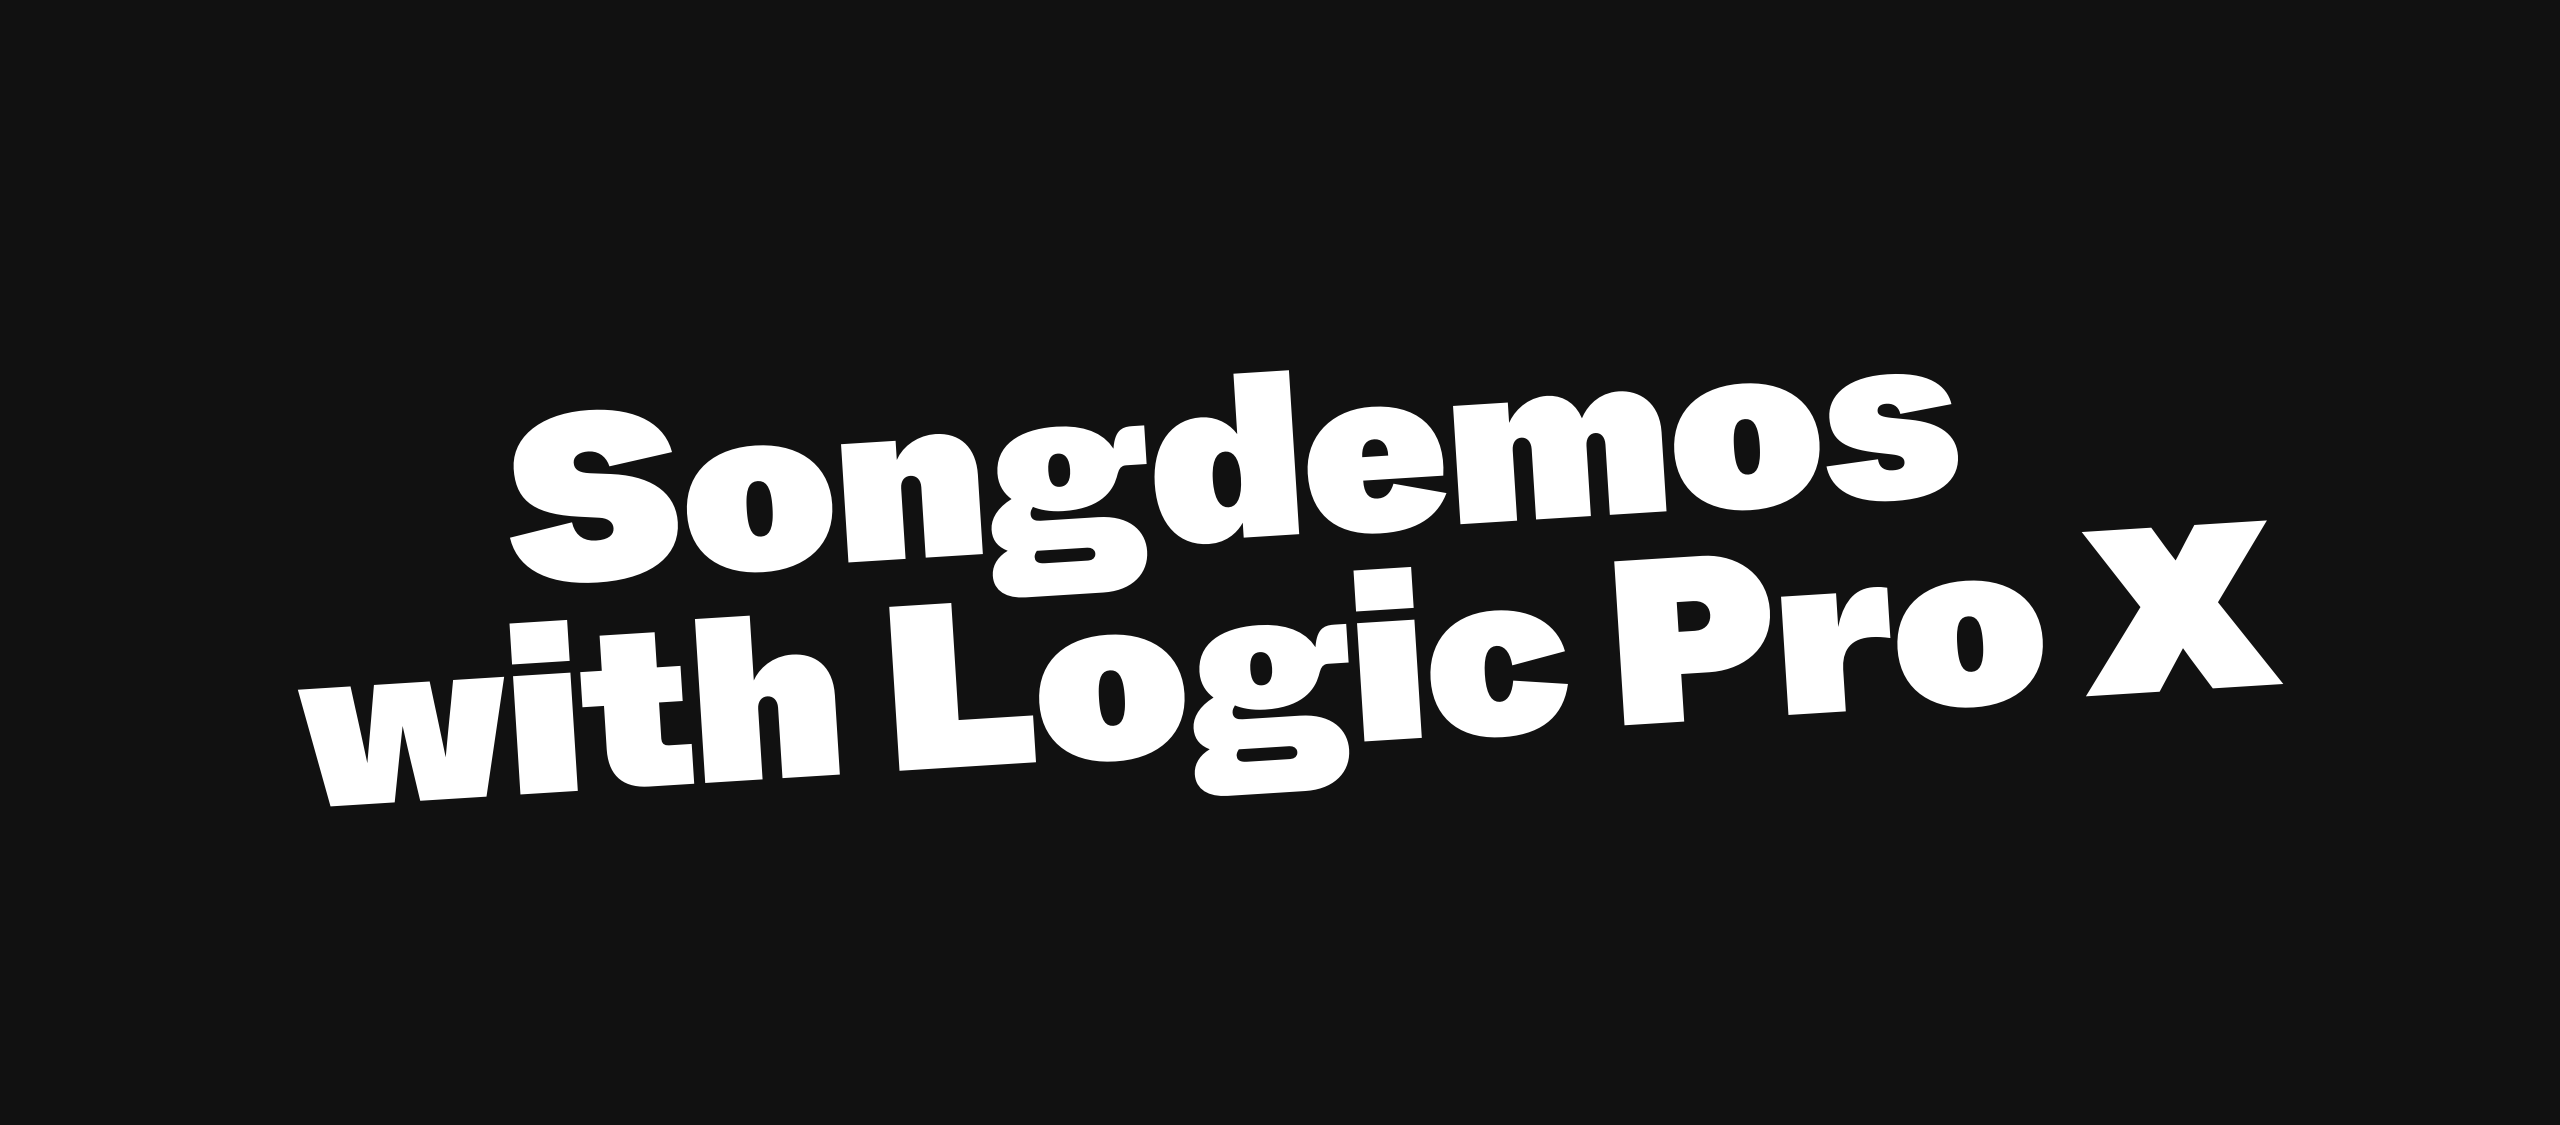 Songdemos with Logic Pro X